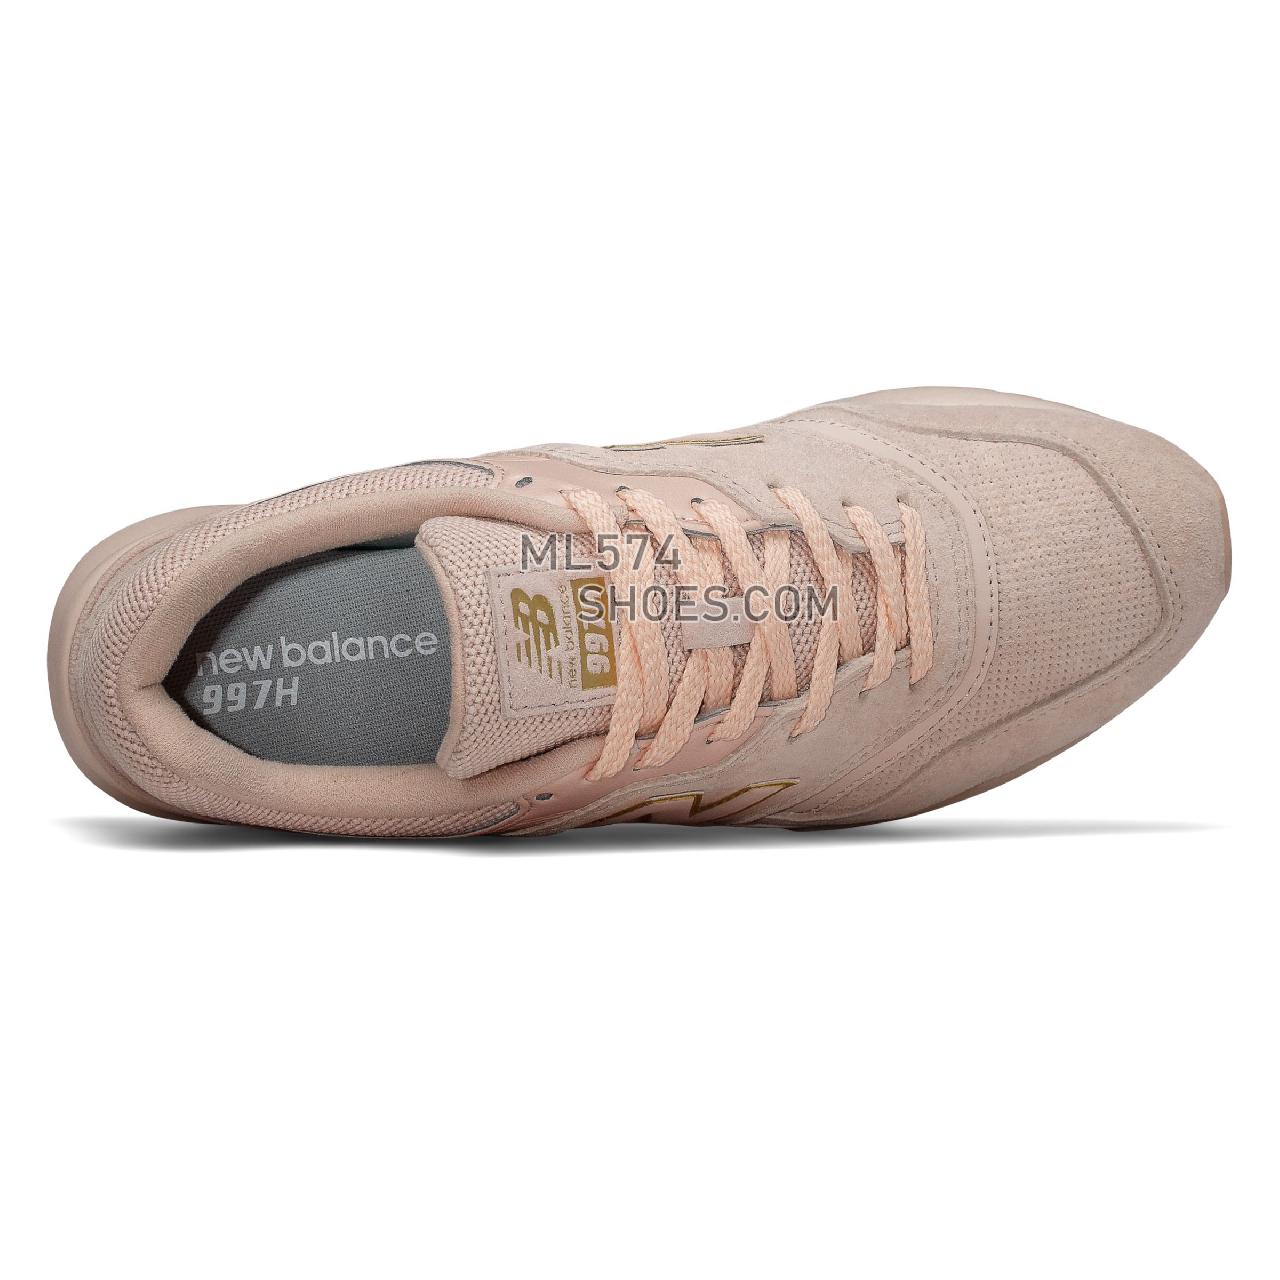 New Balance 997H - Women's Classic Sneakers - White Oak - CW997HCD